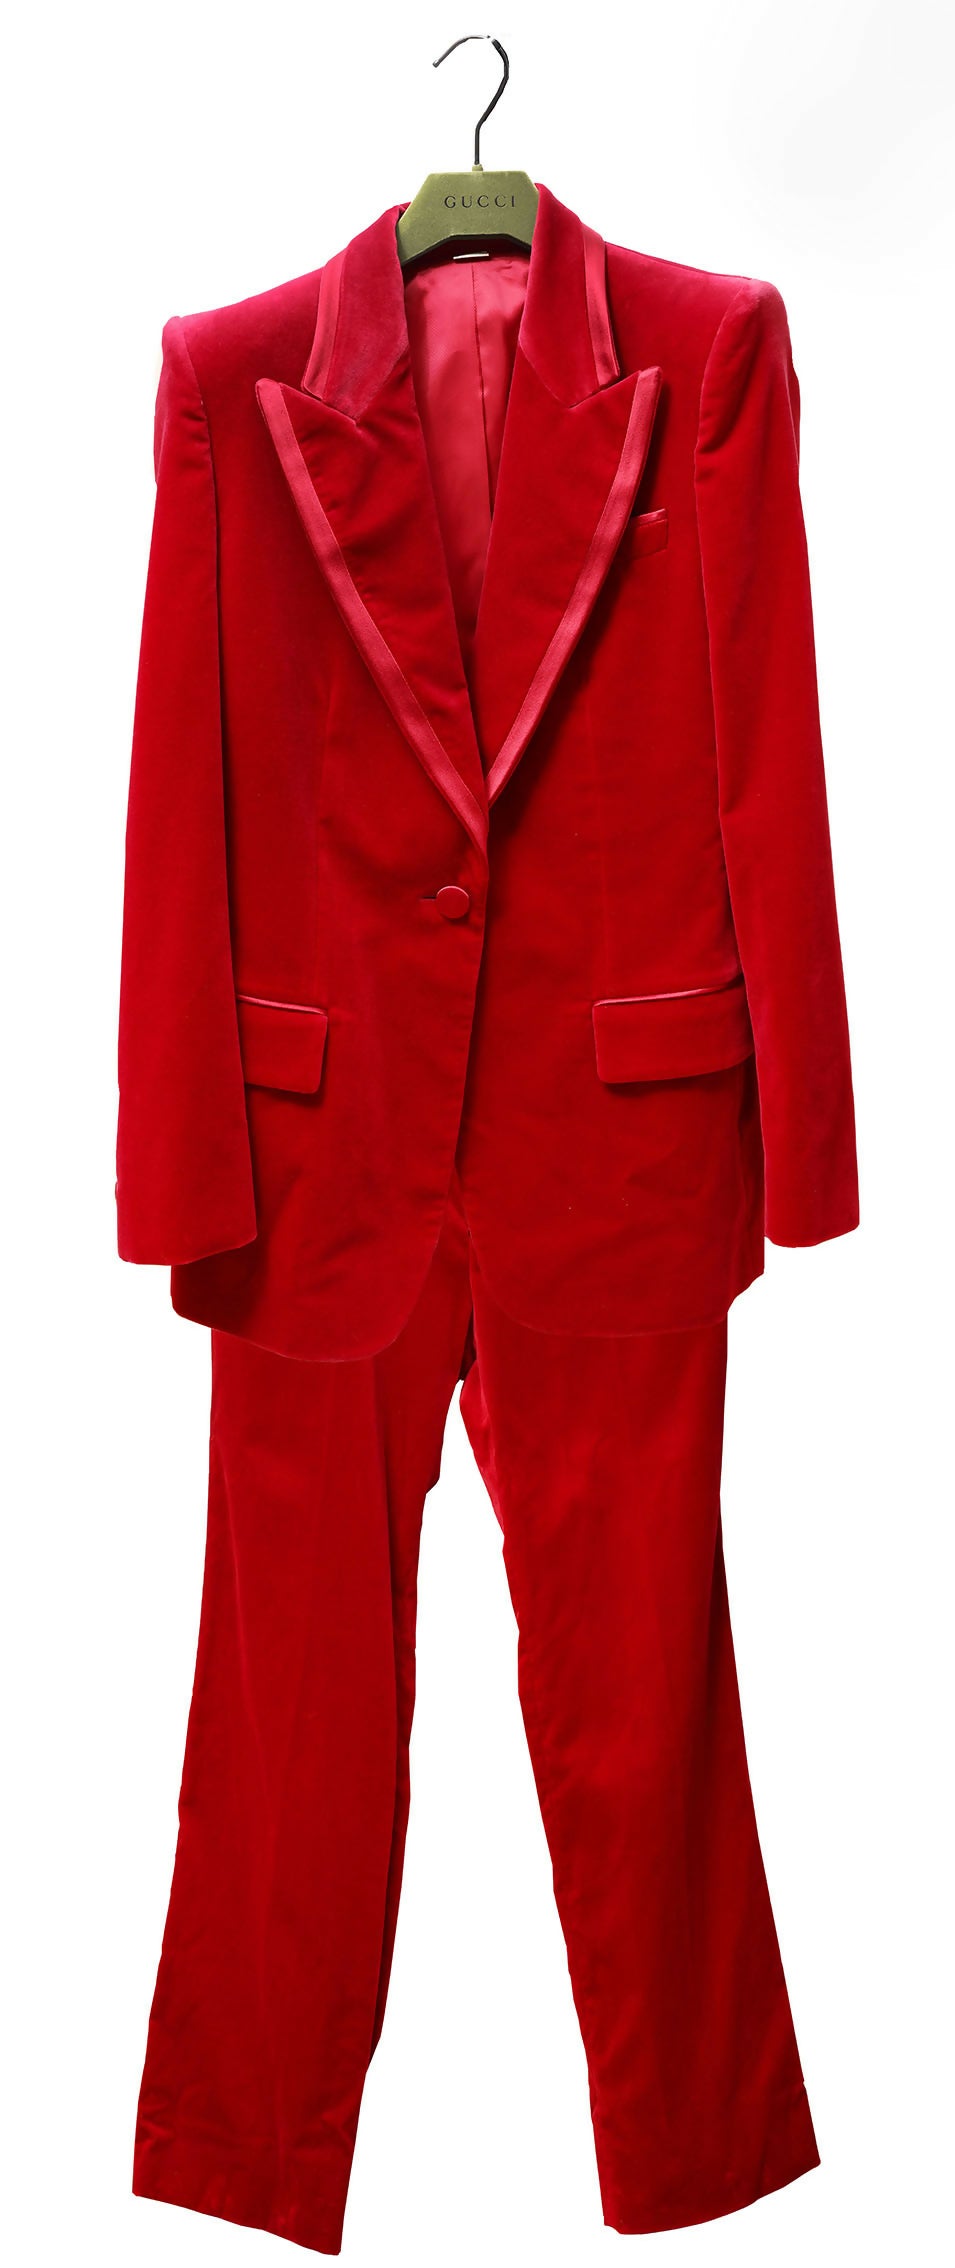 Tom Ford Red Velvet Gucci Suit